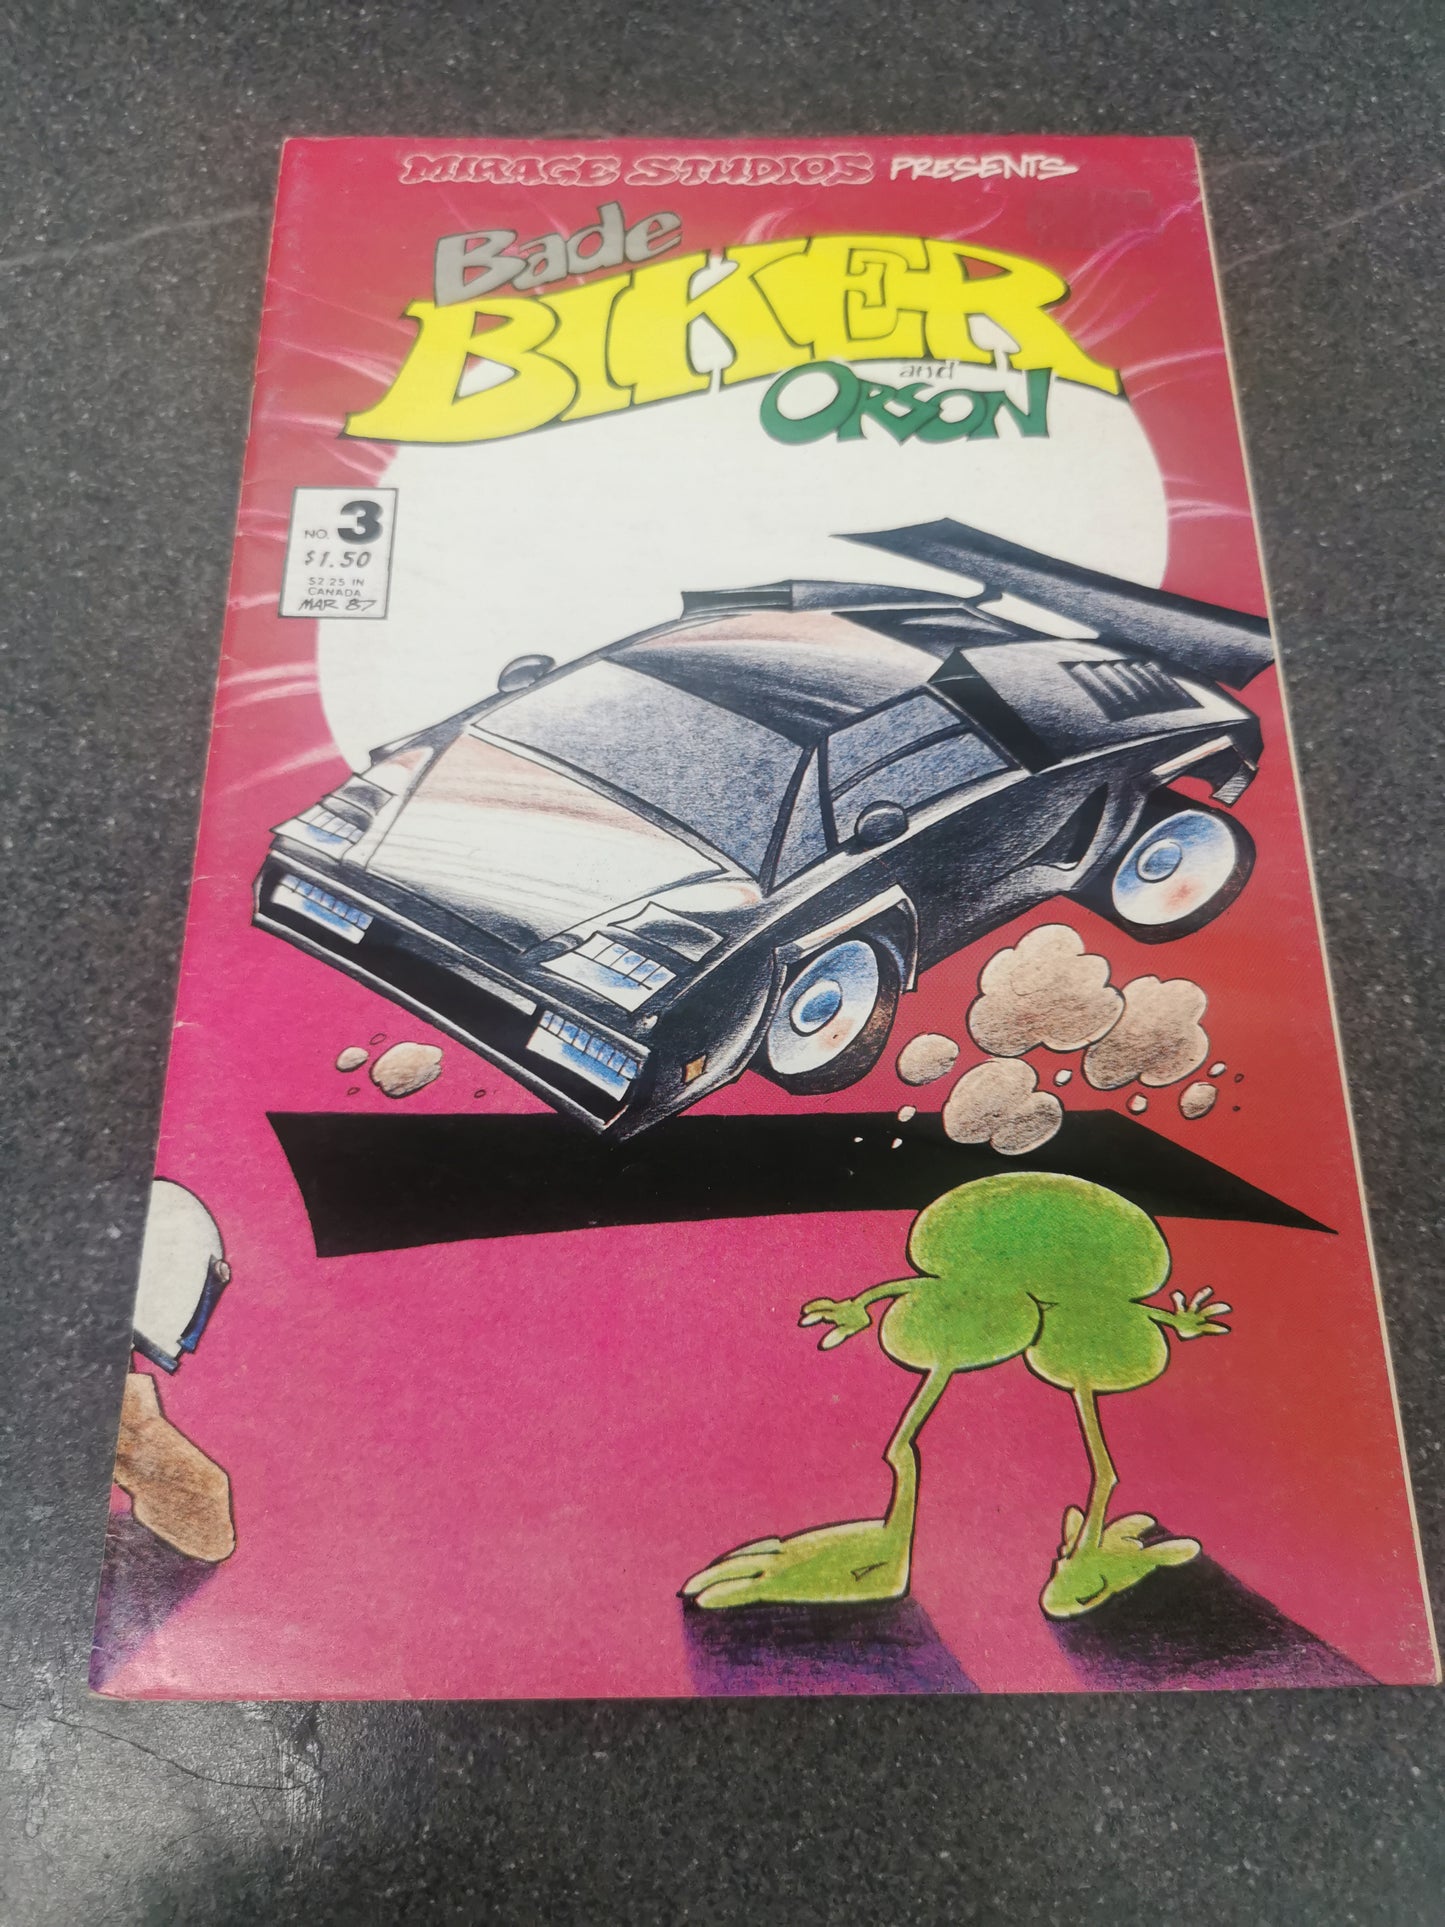 Bade Biker and Orson #3 1987 Mirage Studios comic